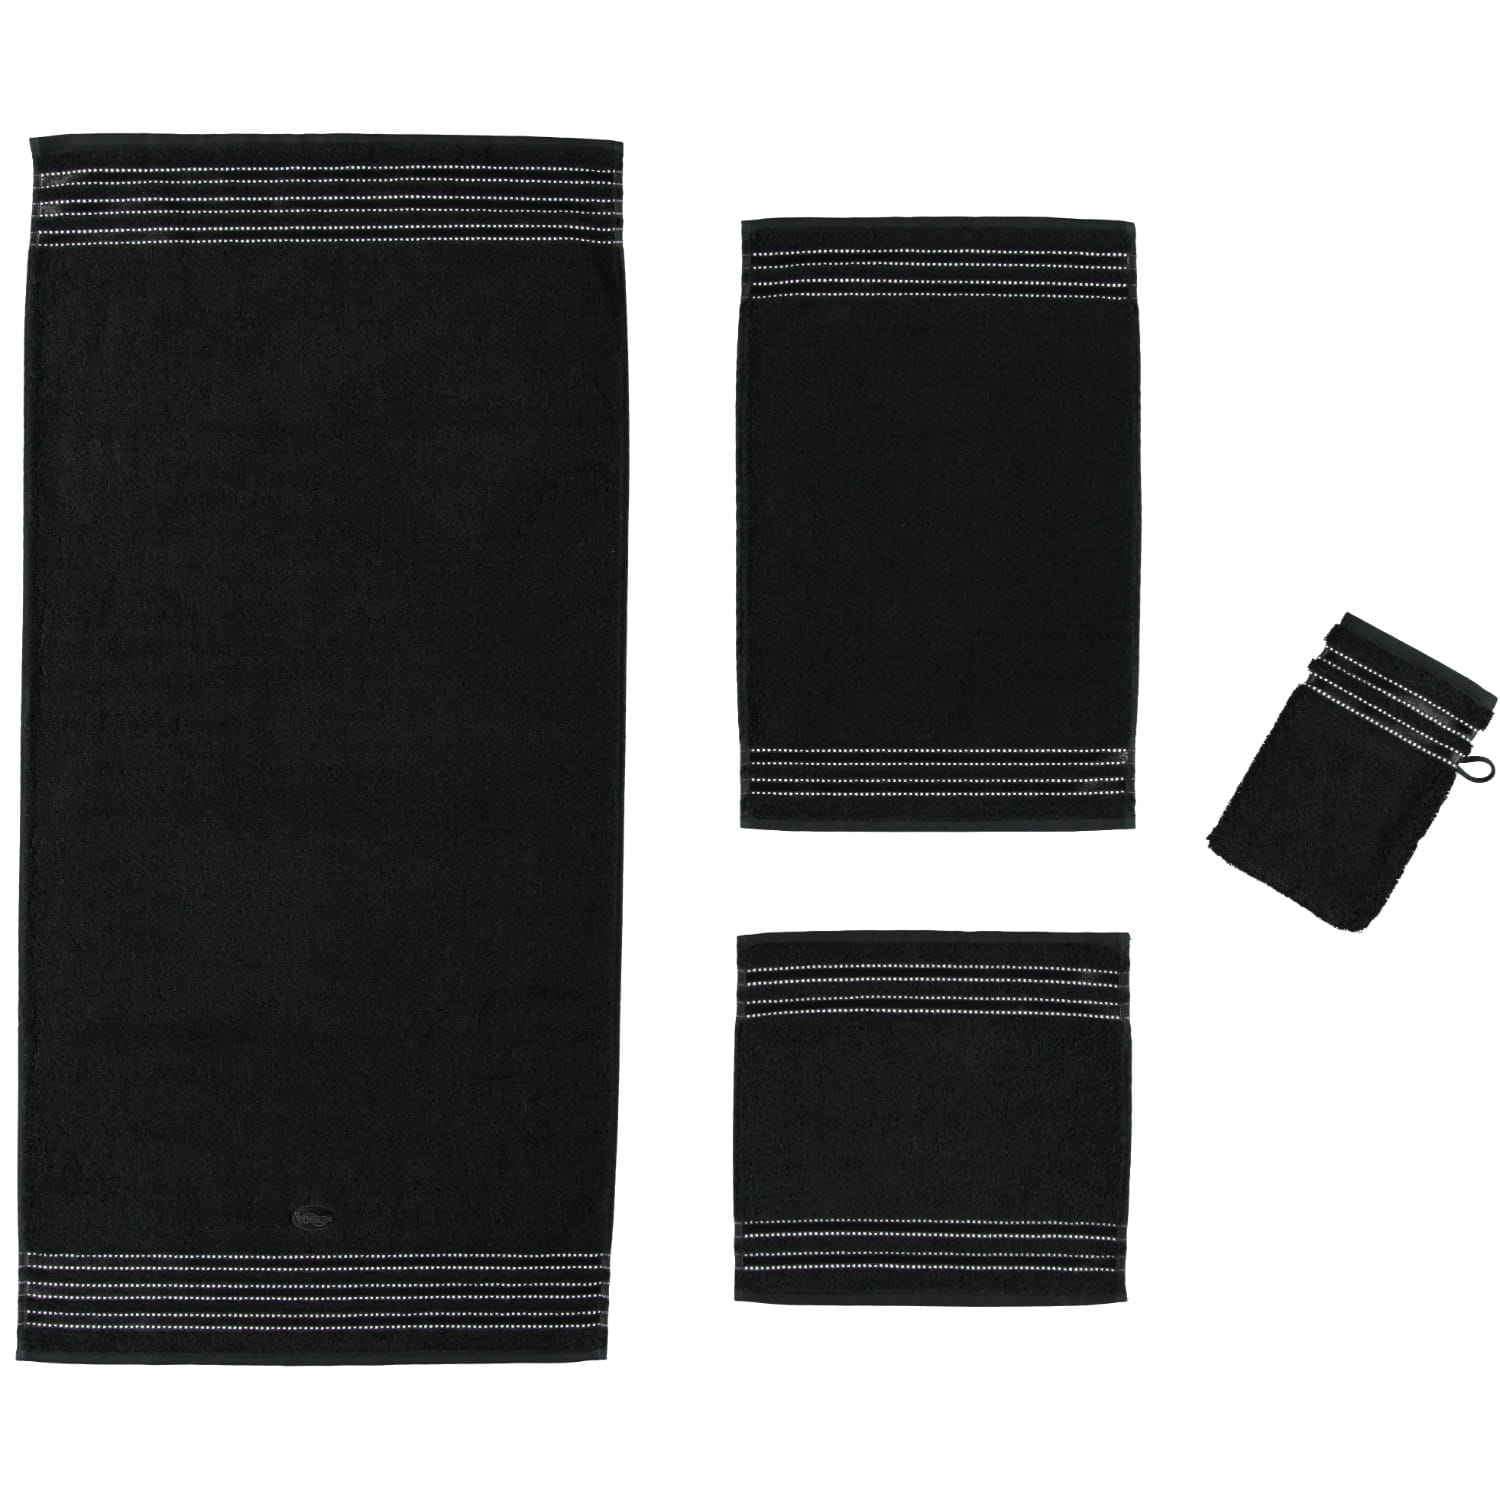 Vossen Cult de Luxe - Farbe: 790 - schwarz | Vossen Handtücher | Vossen |  Marken